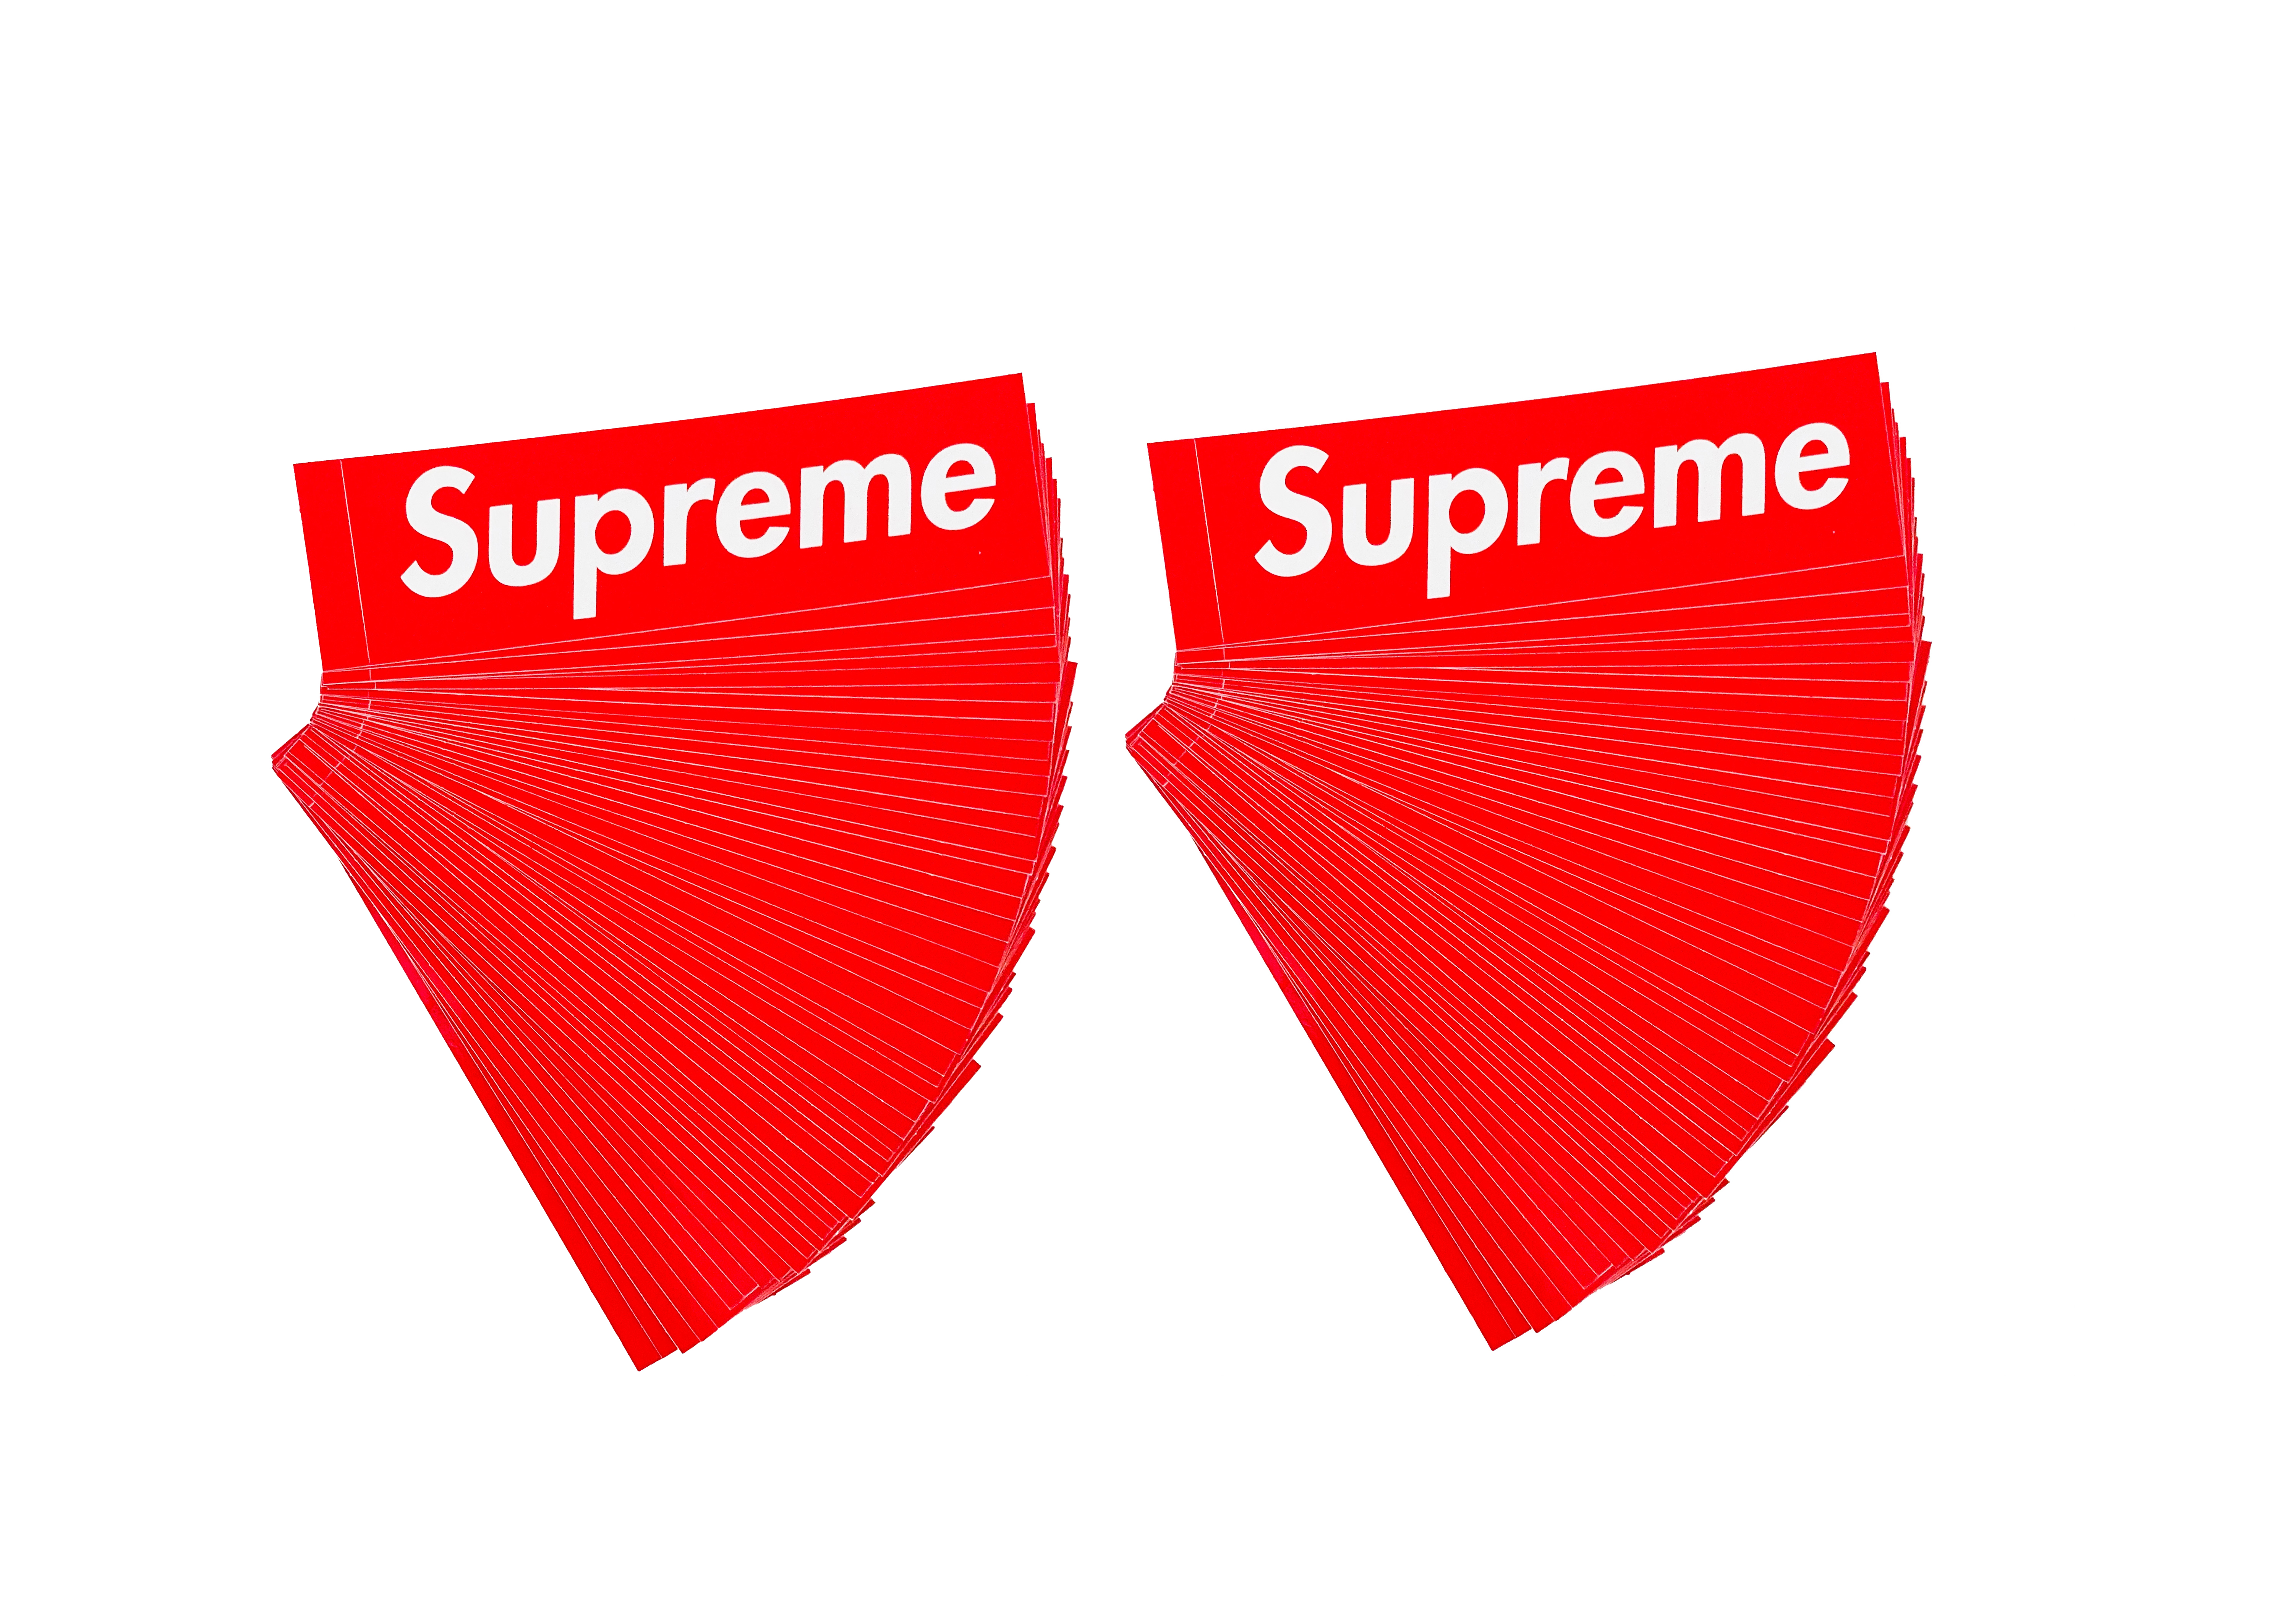 100% Authentic Supreme Red Box Logo Stickers 